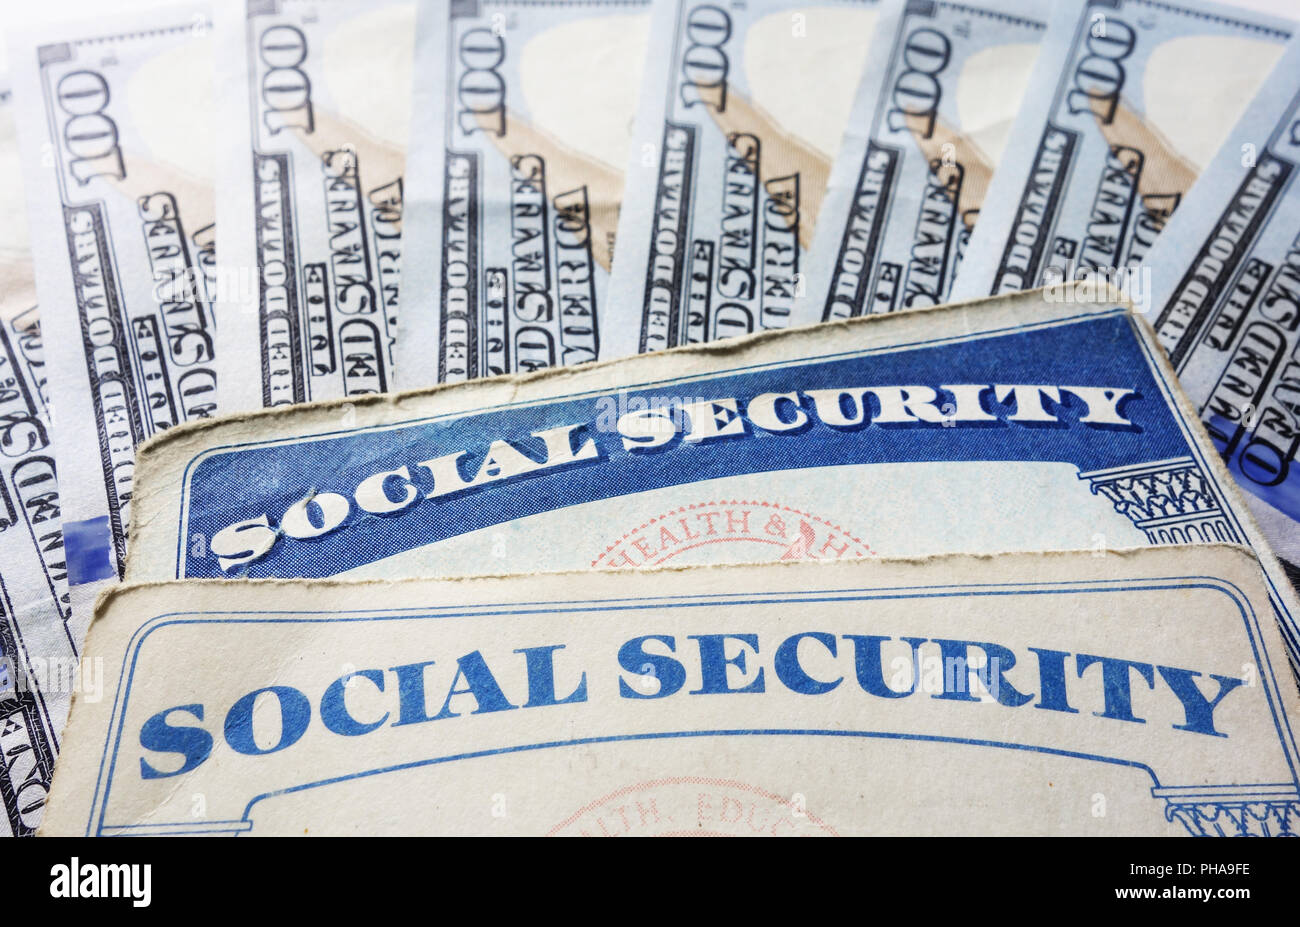 Social Security Stock Photo